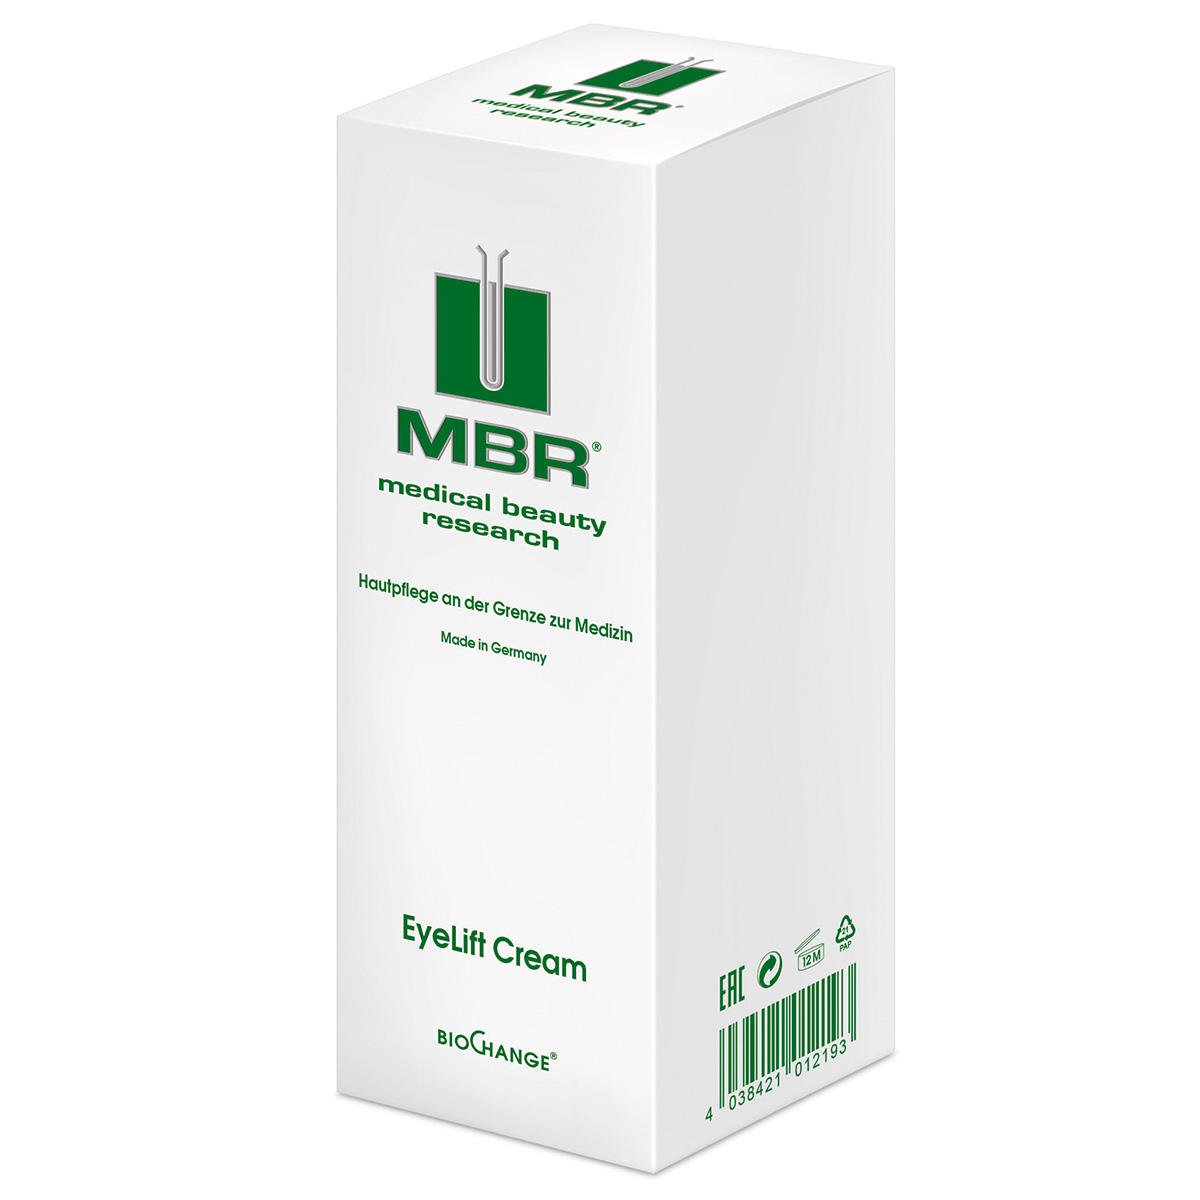 MBR Medical Beauty Research BioChange EyeLift Cream 30 ml - 3